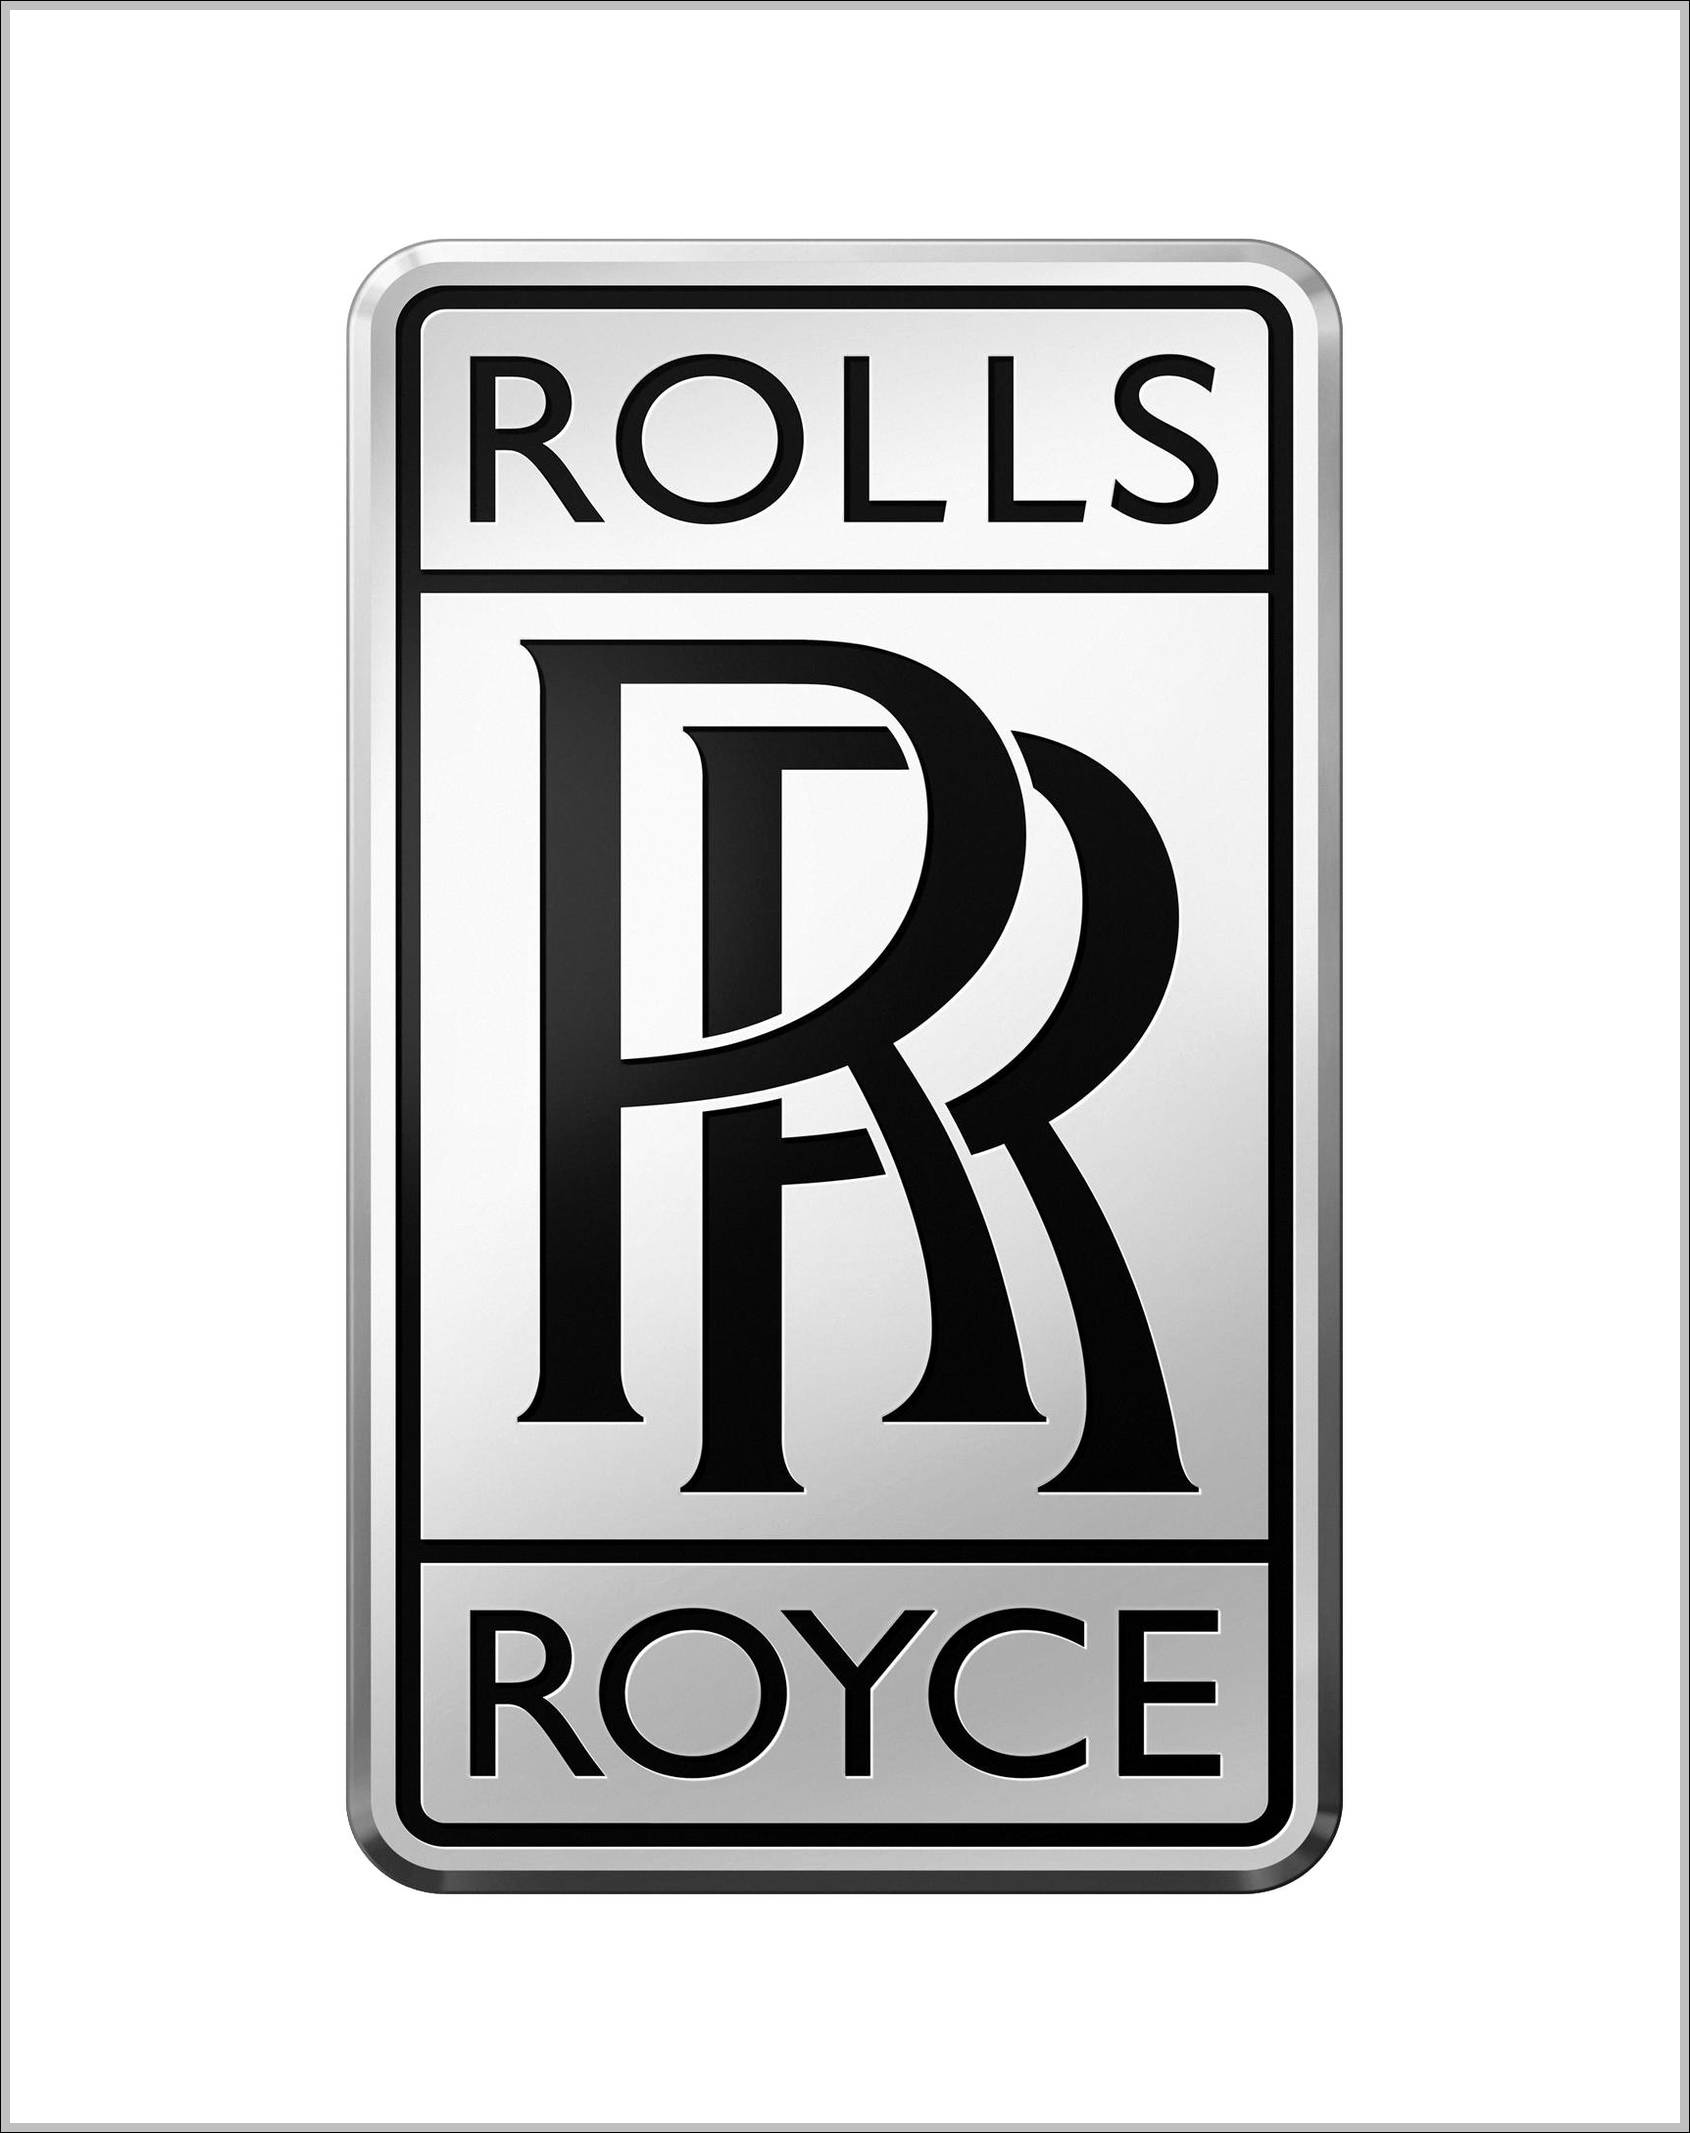 Rolls Royce Motor Cars logo